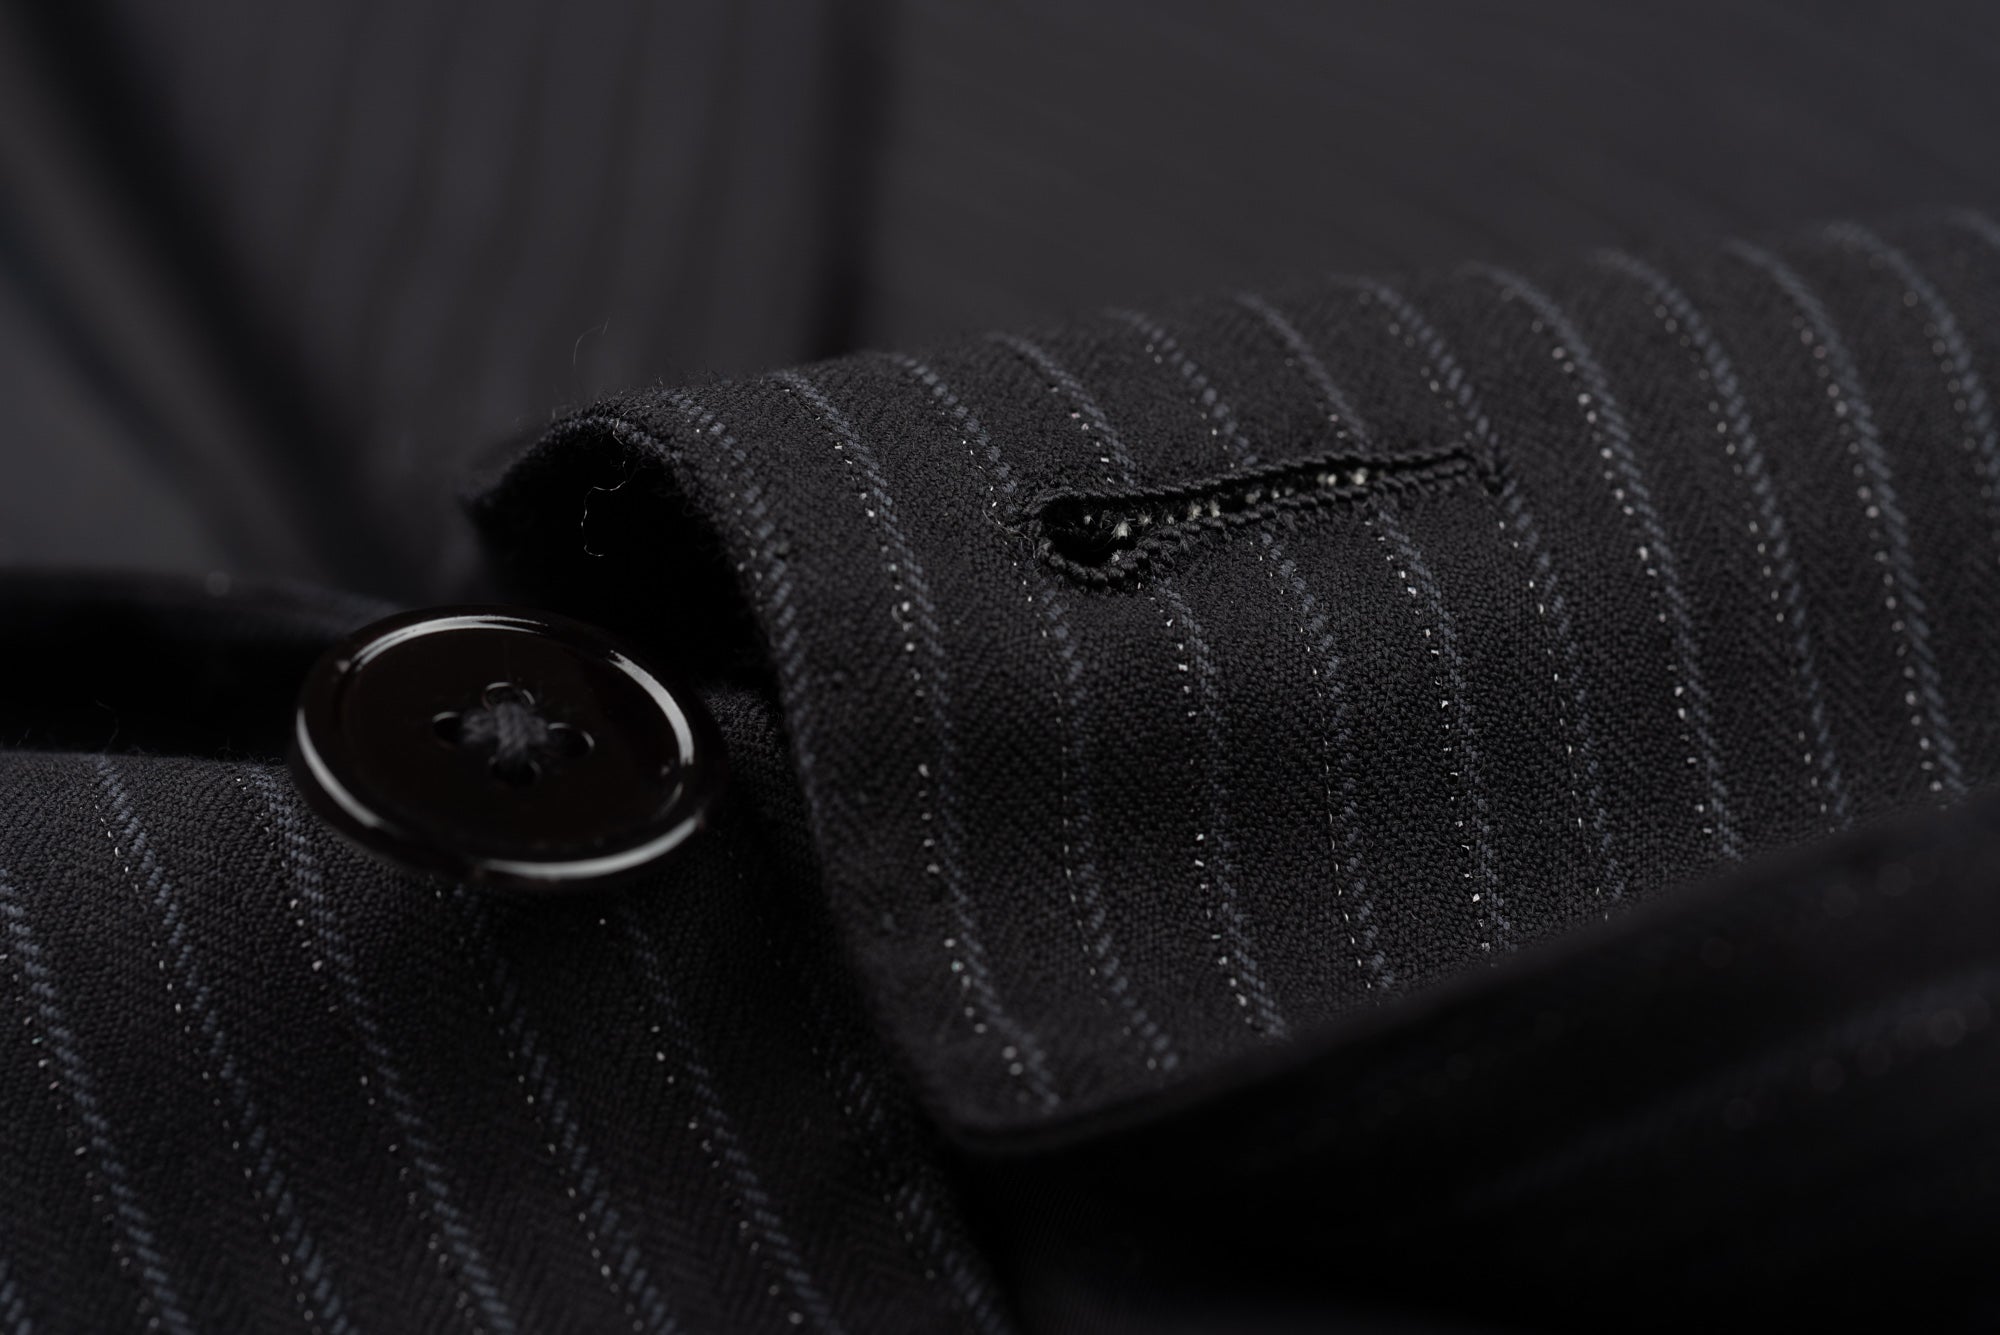 D'AVENZA Roma Handmade Black Striped Wool Super 120's Suit EU 50 NEW US 40 D'AVENZA